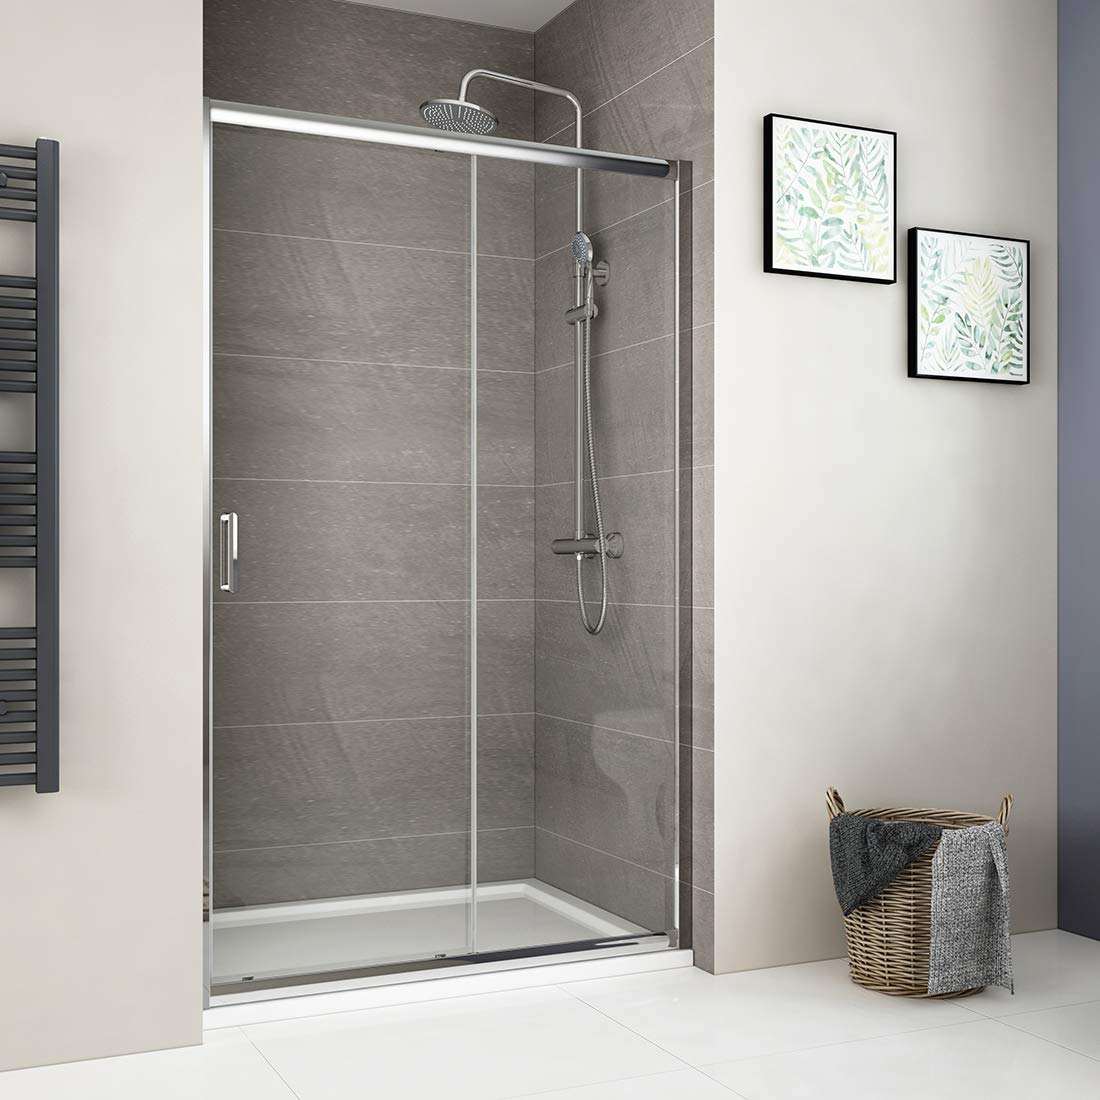 Duschkabine putzen Hausmittel gegen Kalk im Badezimmer